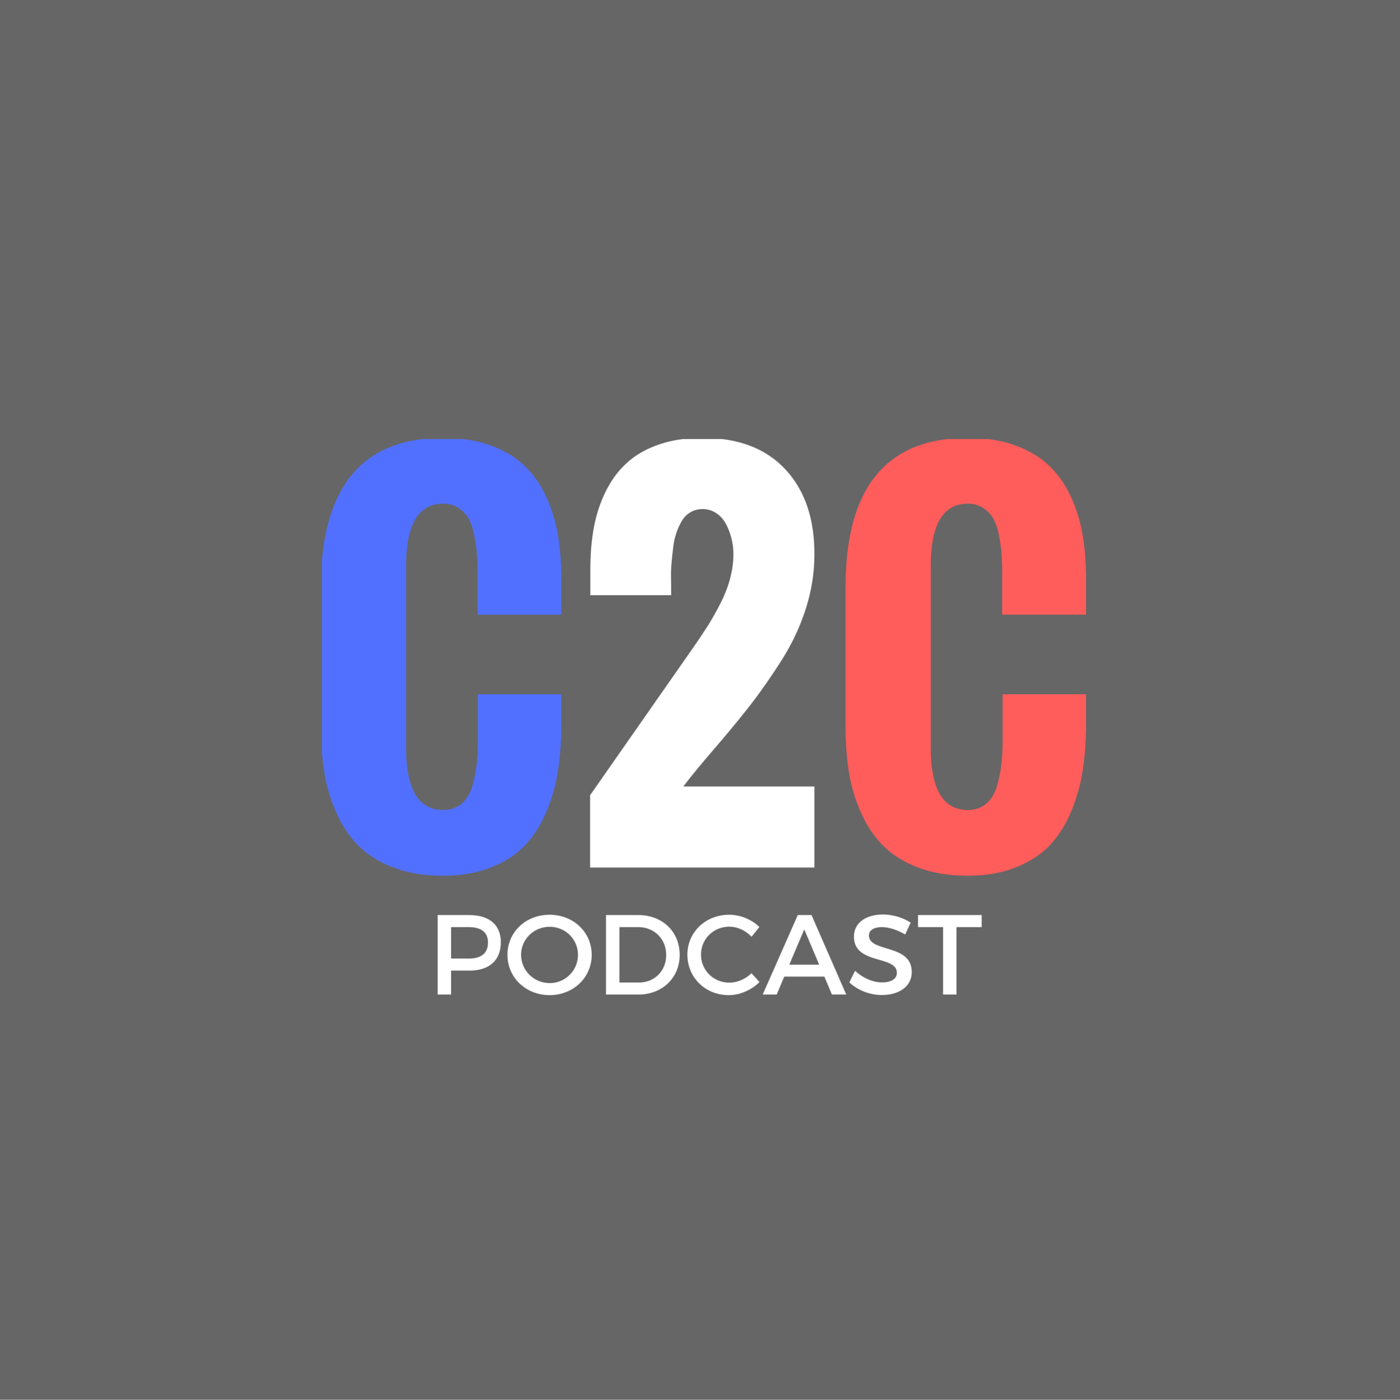 Coast 2 Coast Podcast Episode #5: Southeast Division Preview